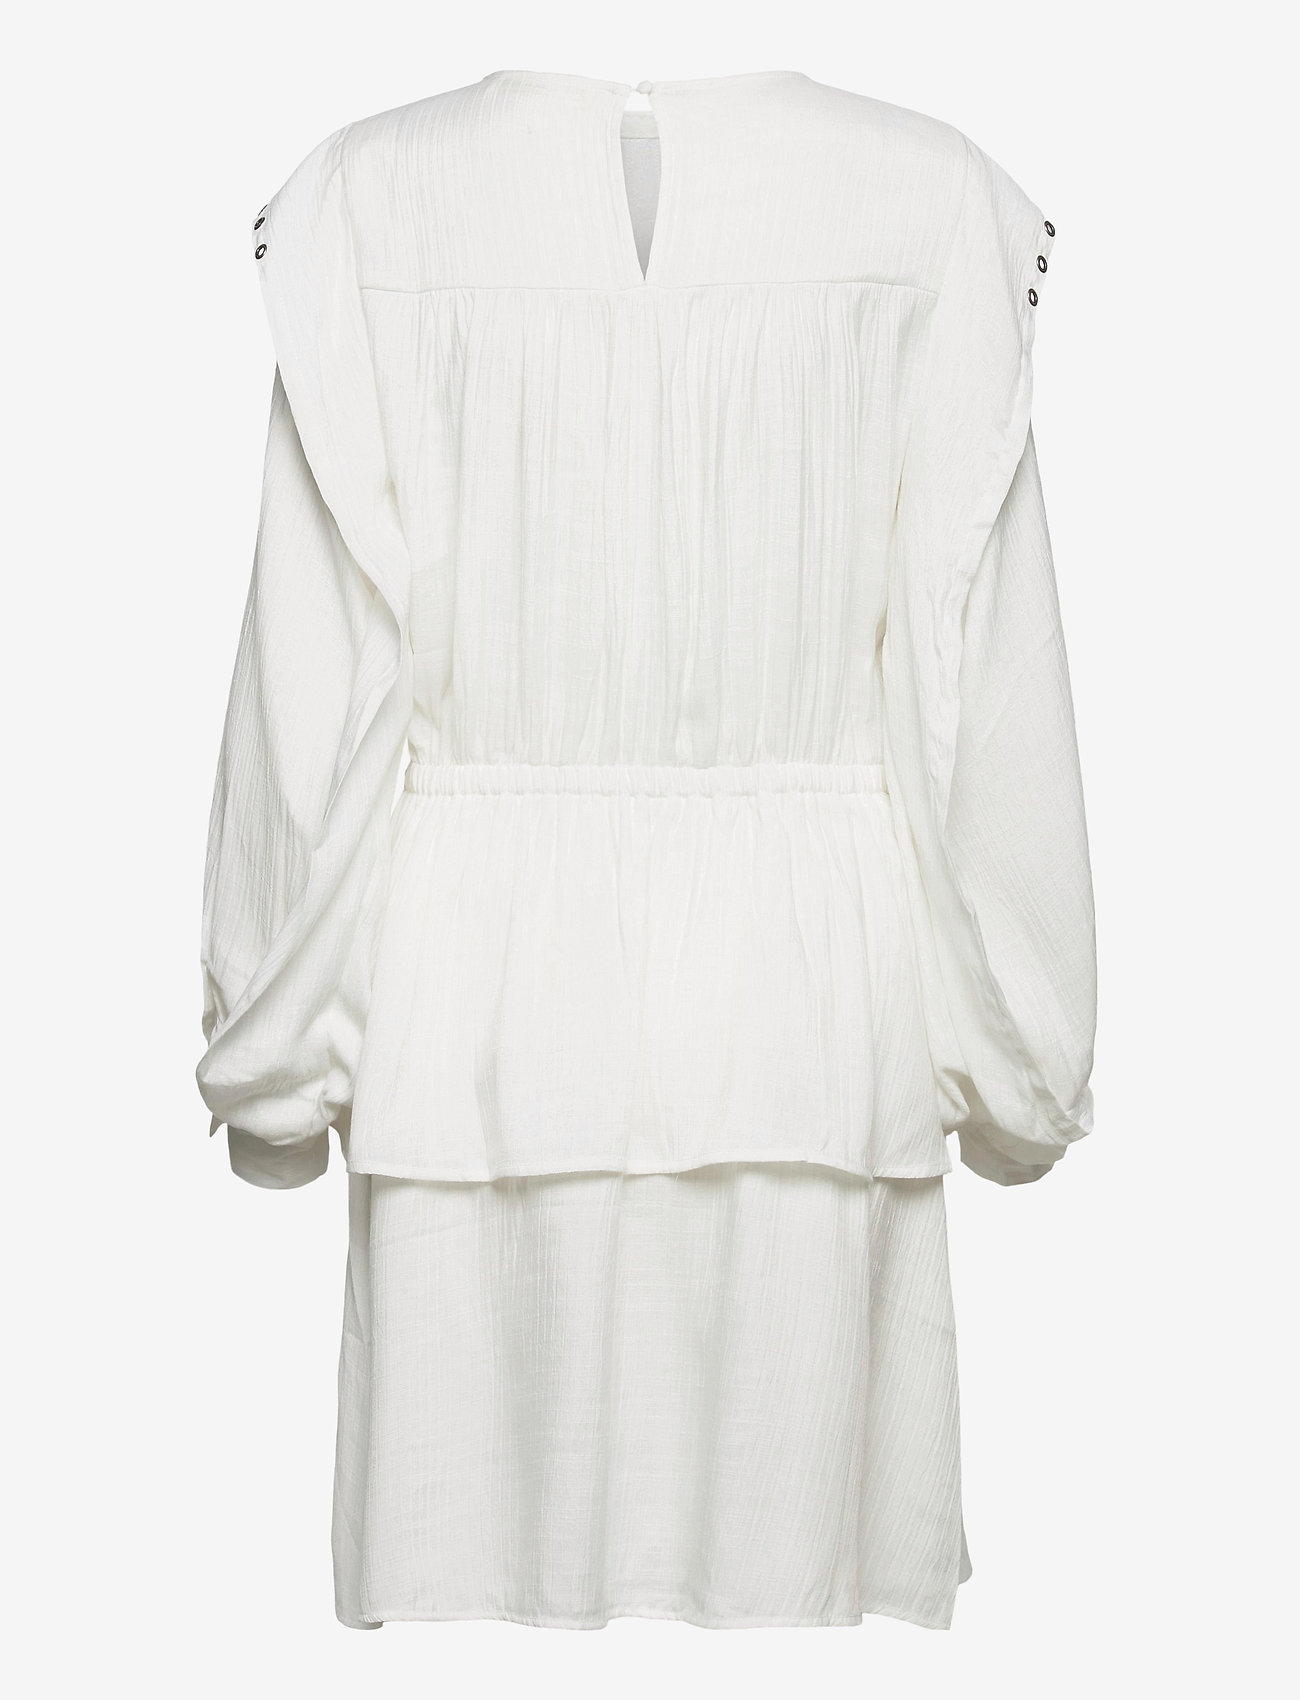 Sofie Schnoor - Dress - summer dresses - off white - 1